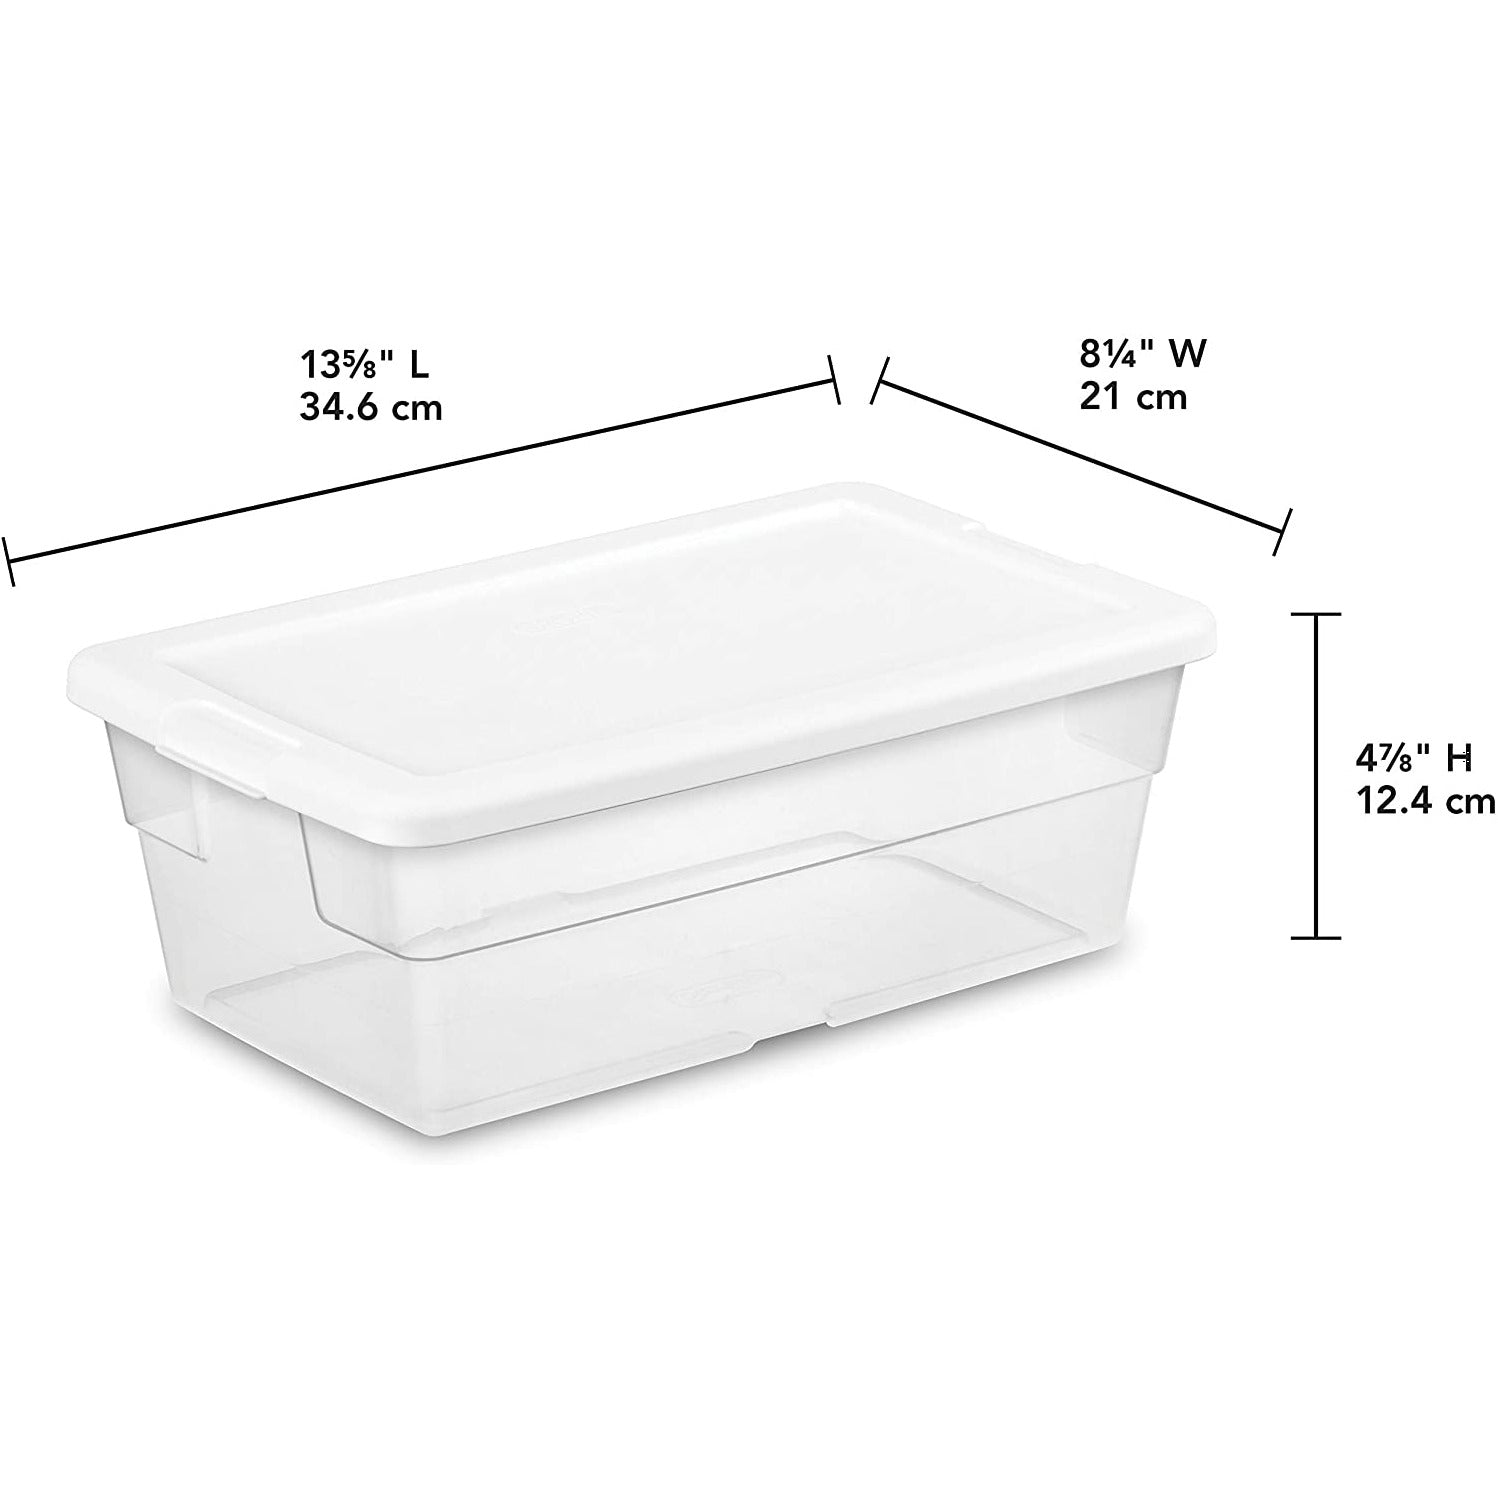 Sterilite Multi-Size Plastic Stackable Storage Basket Bundle, White